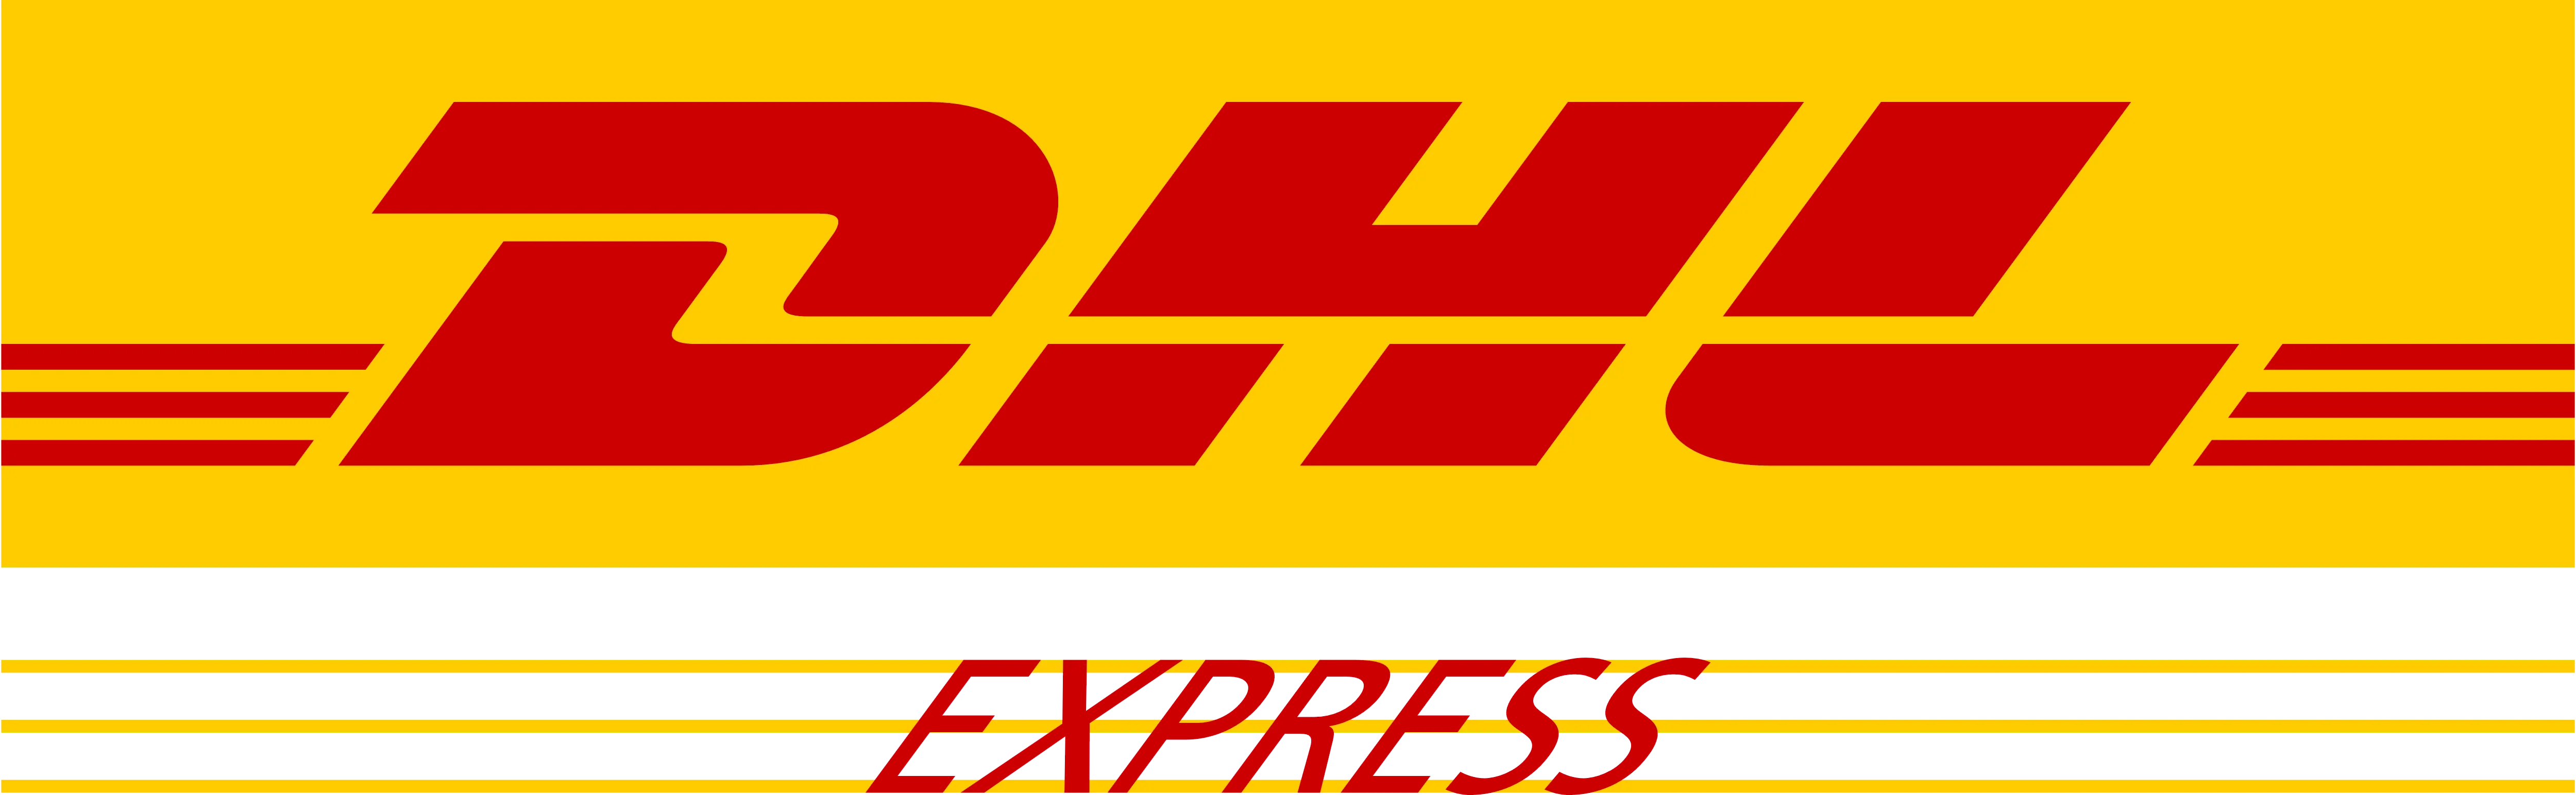 Dhl алматы. Логотип ДХЛ. DHL логотип компании. DHL Express. DHL logo svg.